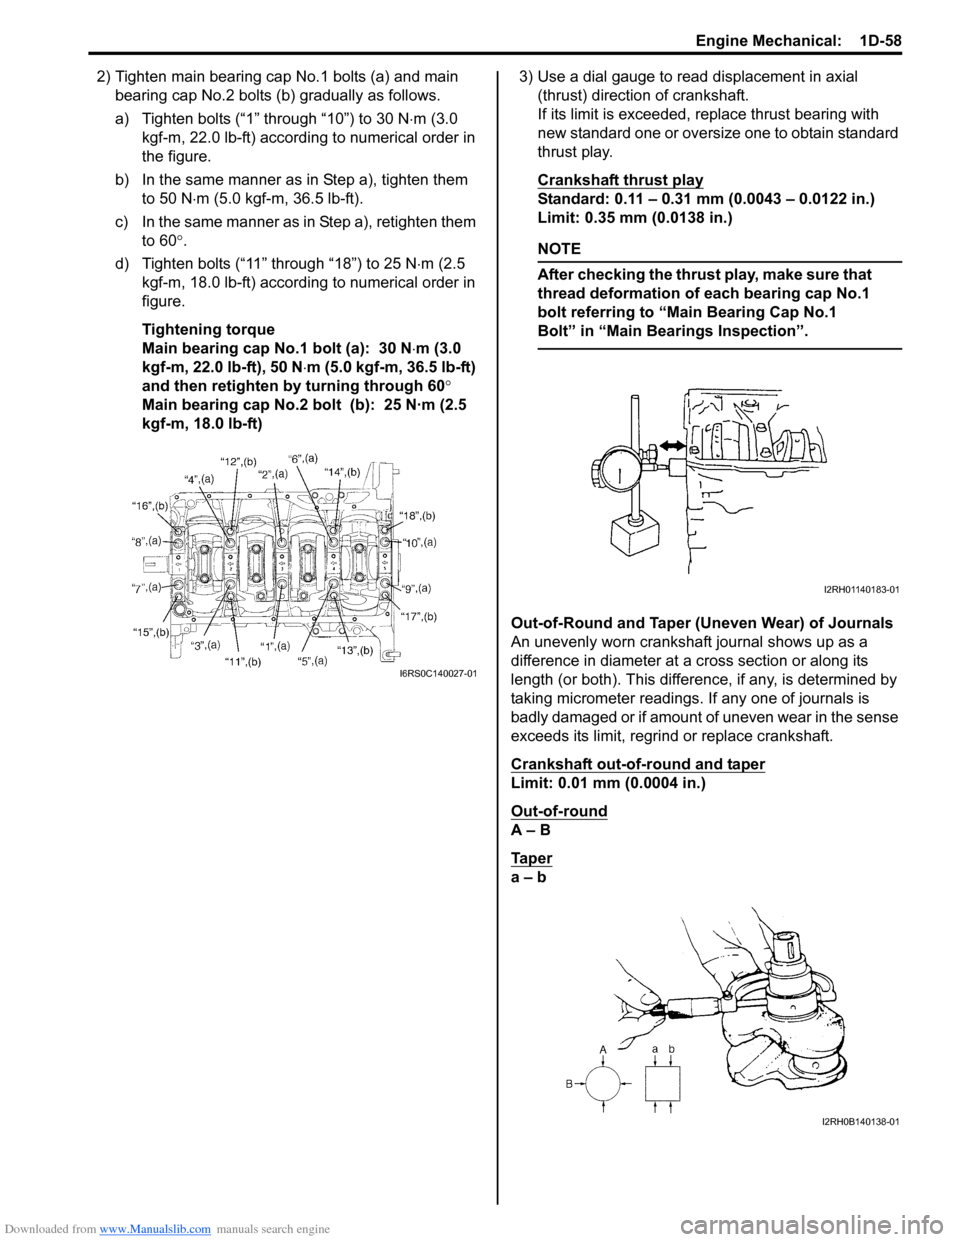 SUZUKI SWIFT 2006 2.G Service Workshop Manual Downloaded from www.Manualslib.com manuals search engine Engine Mechanical:  1D-58
2) Tighten main bearing cap No.1 bolts (a) and main bearing cap No.2 bolts (b ) gradually as follows.
a) Tighten bolt